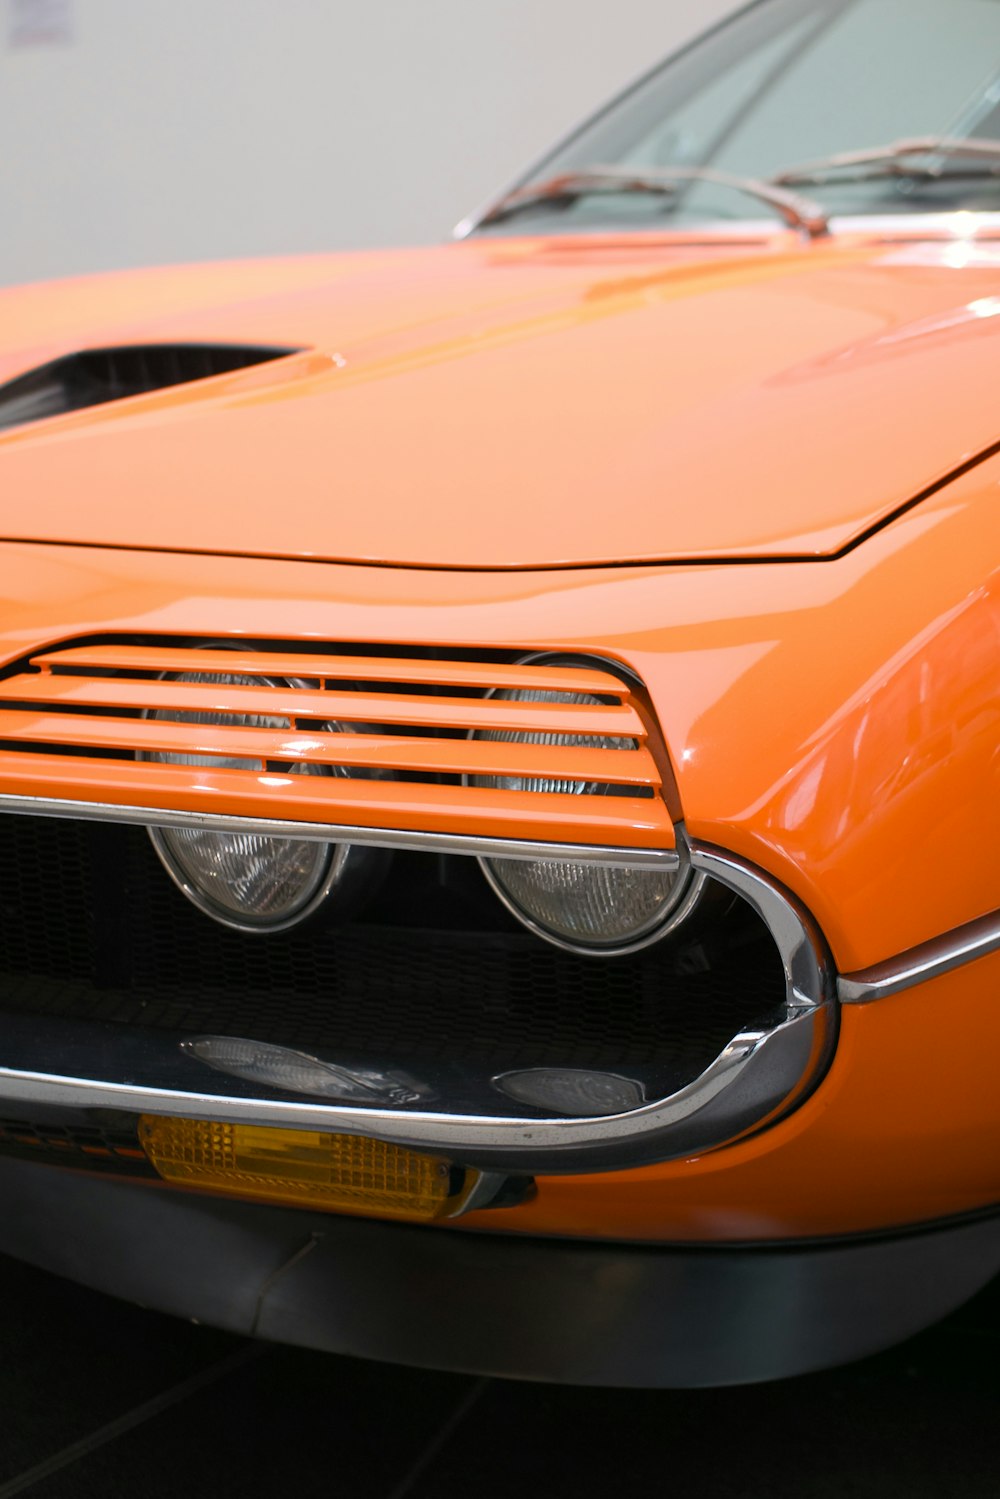 an orange sports car is parked in a garage